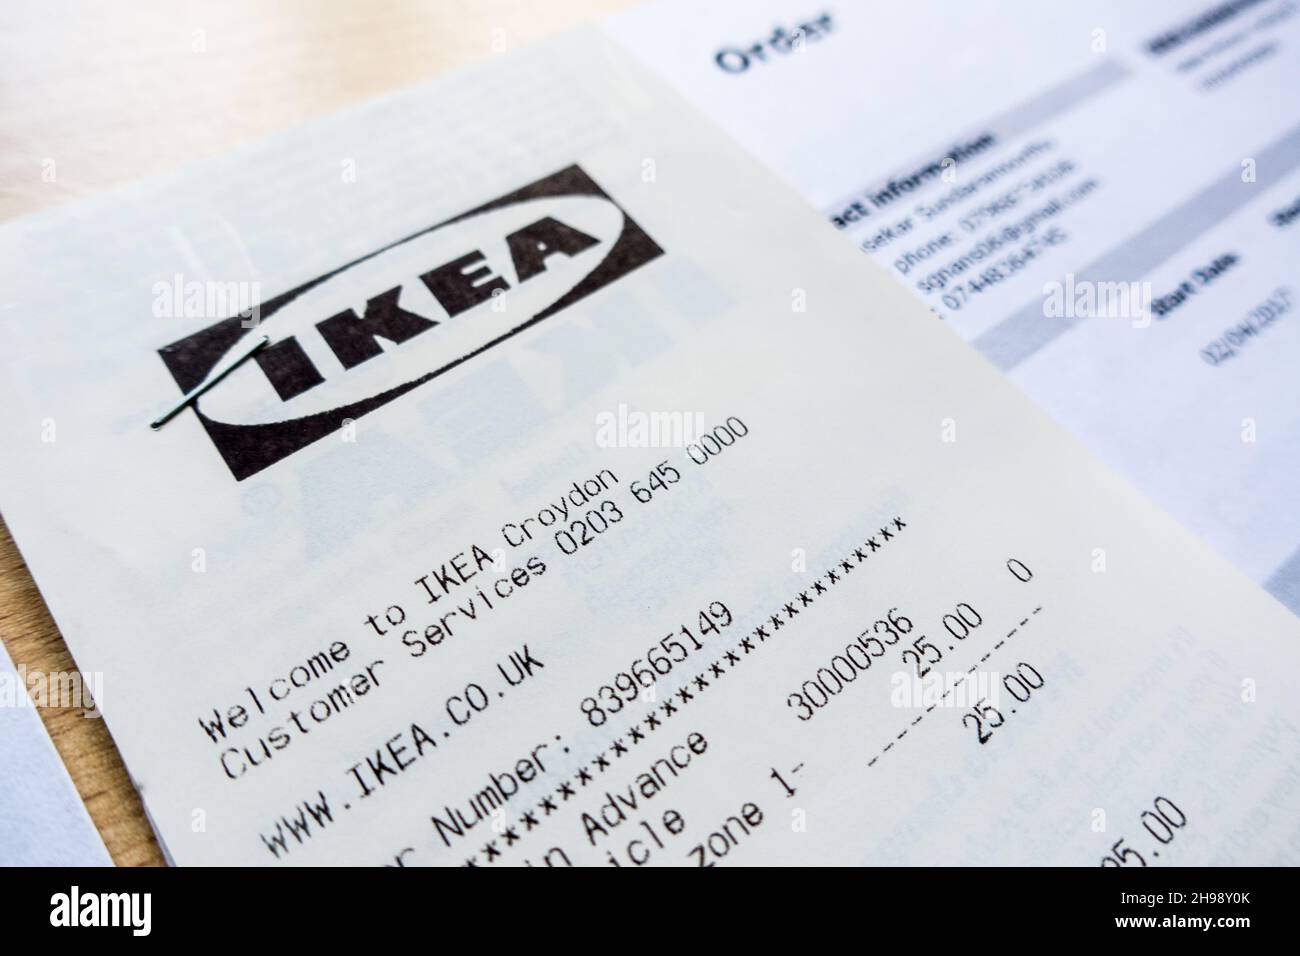 Ikea Reveals Rug That Looks Like A Giant Receipt Shropshire Star | vlr ...